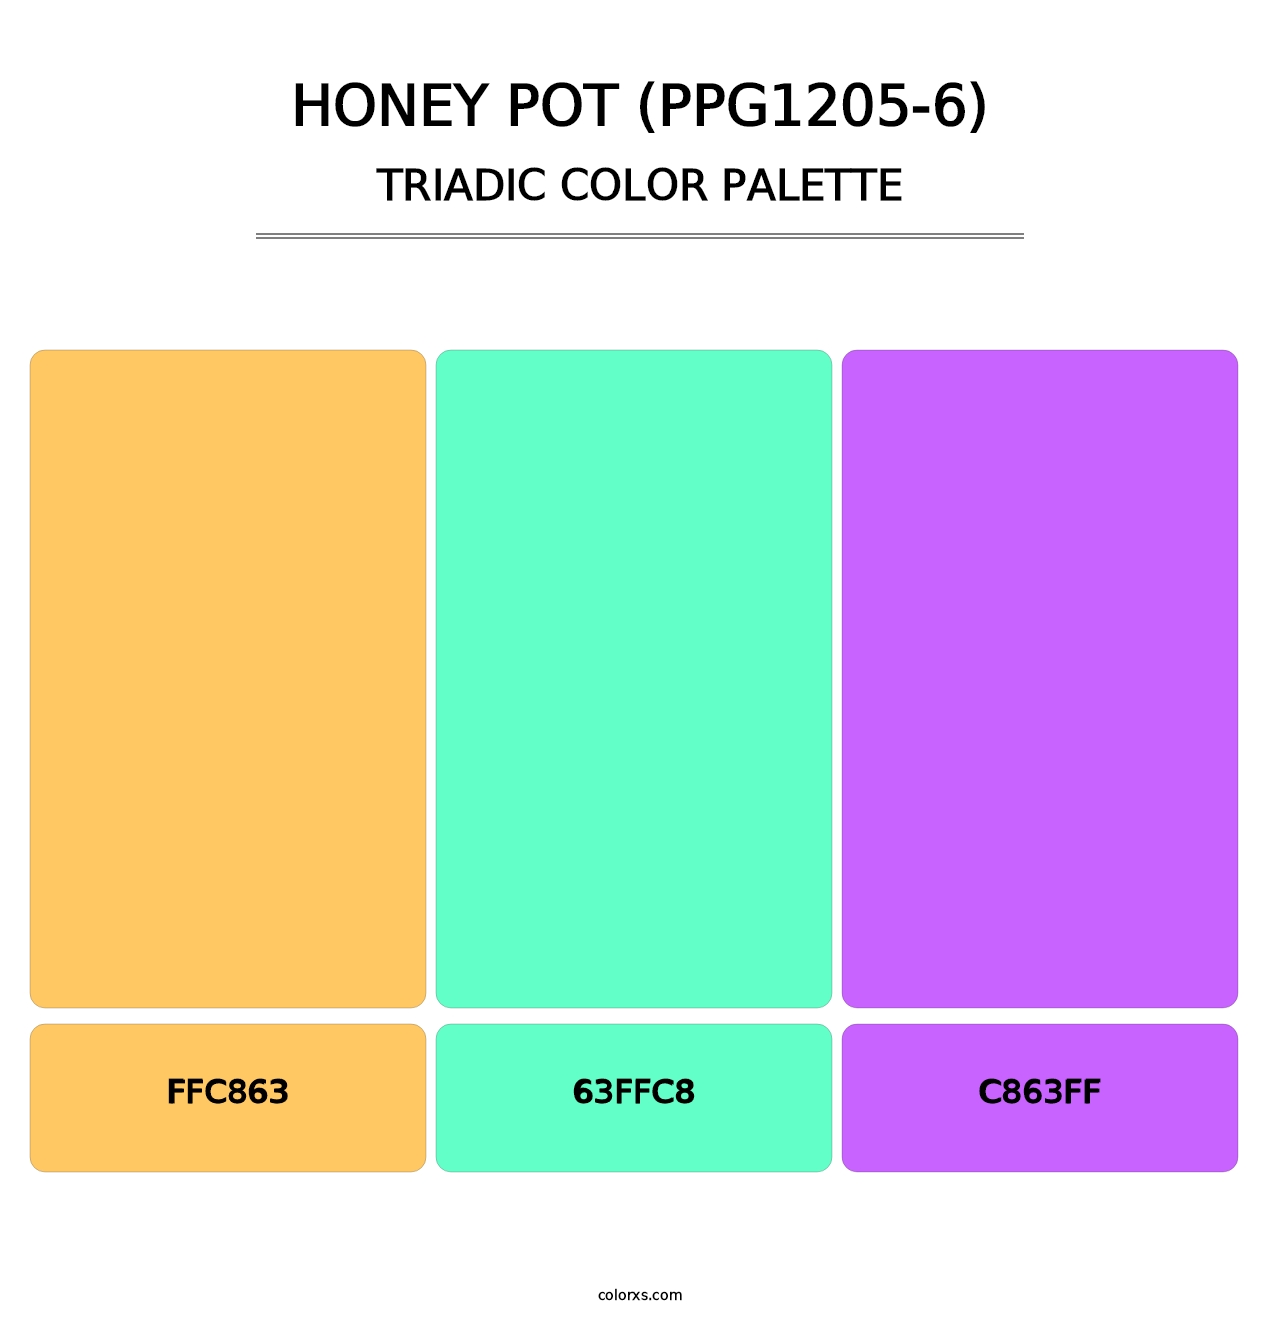 Honey Pot (PPG1205-6) - Triadic Color Palette